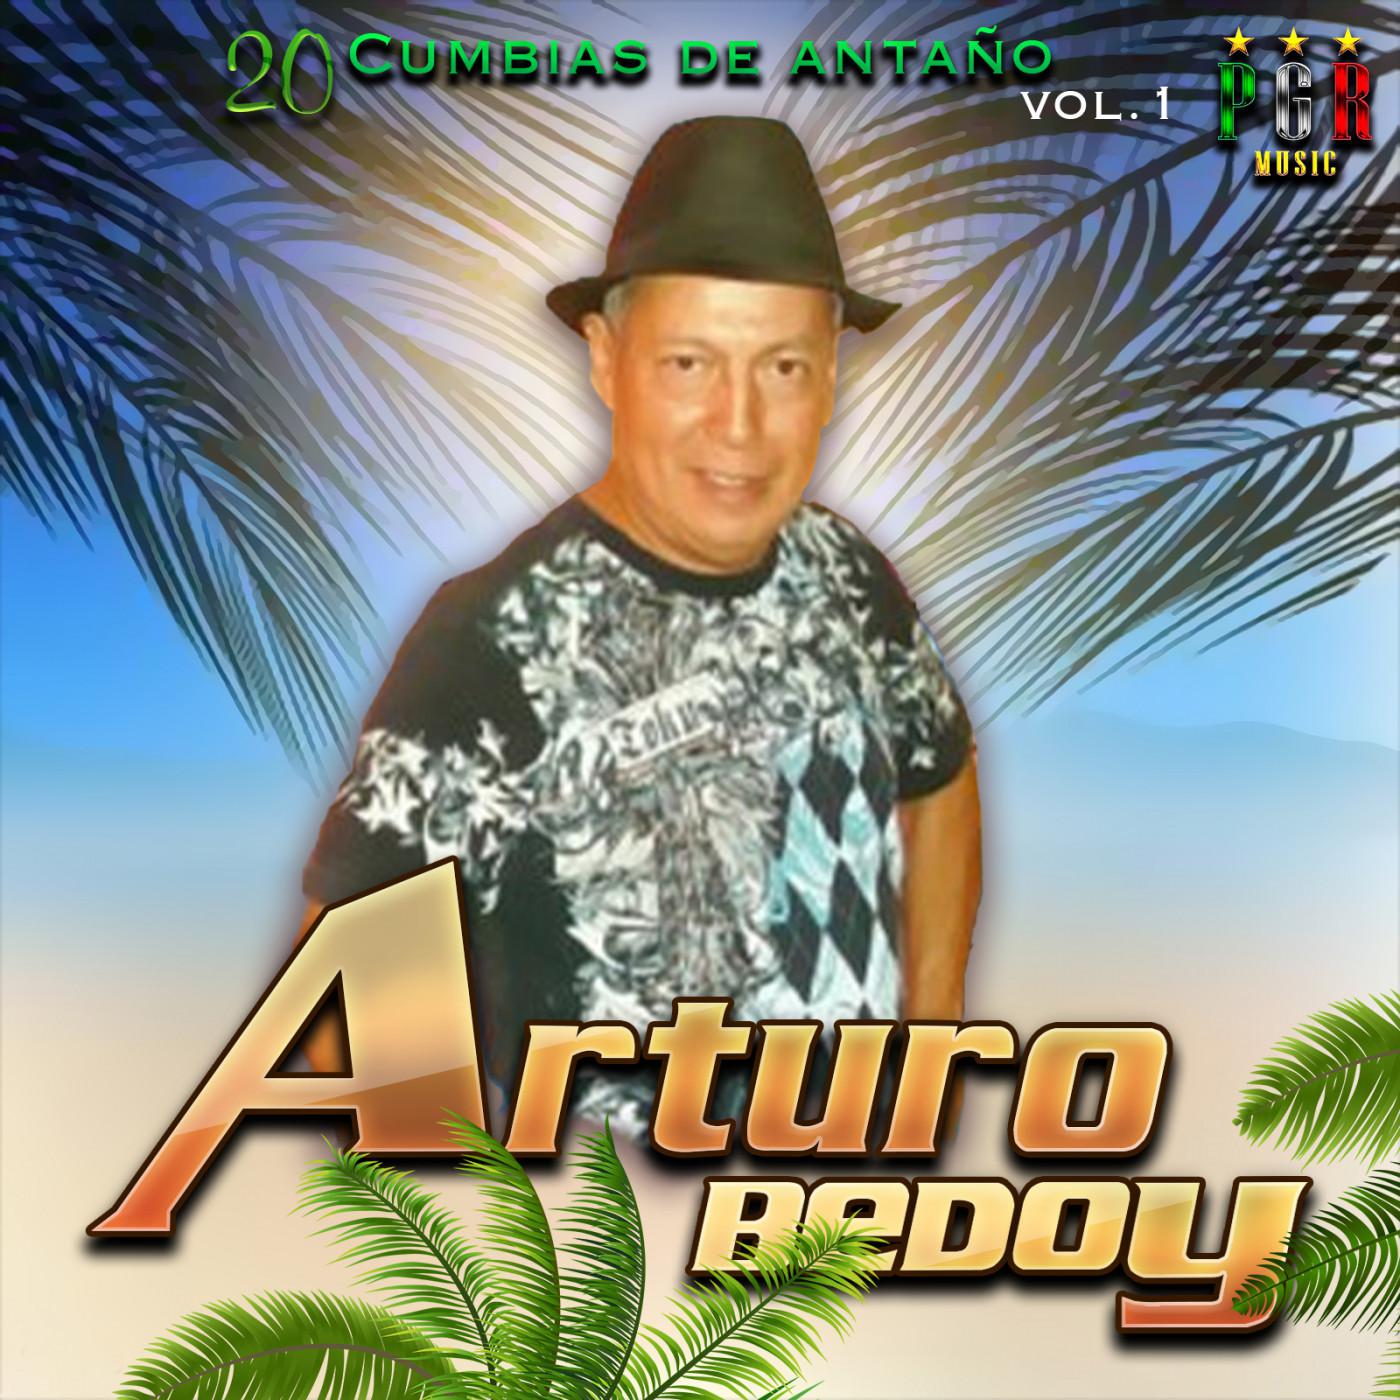 Arturo Bedoy - Morena Ven